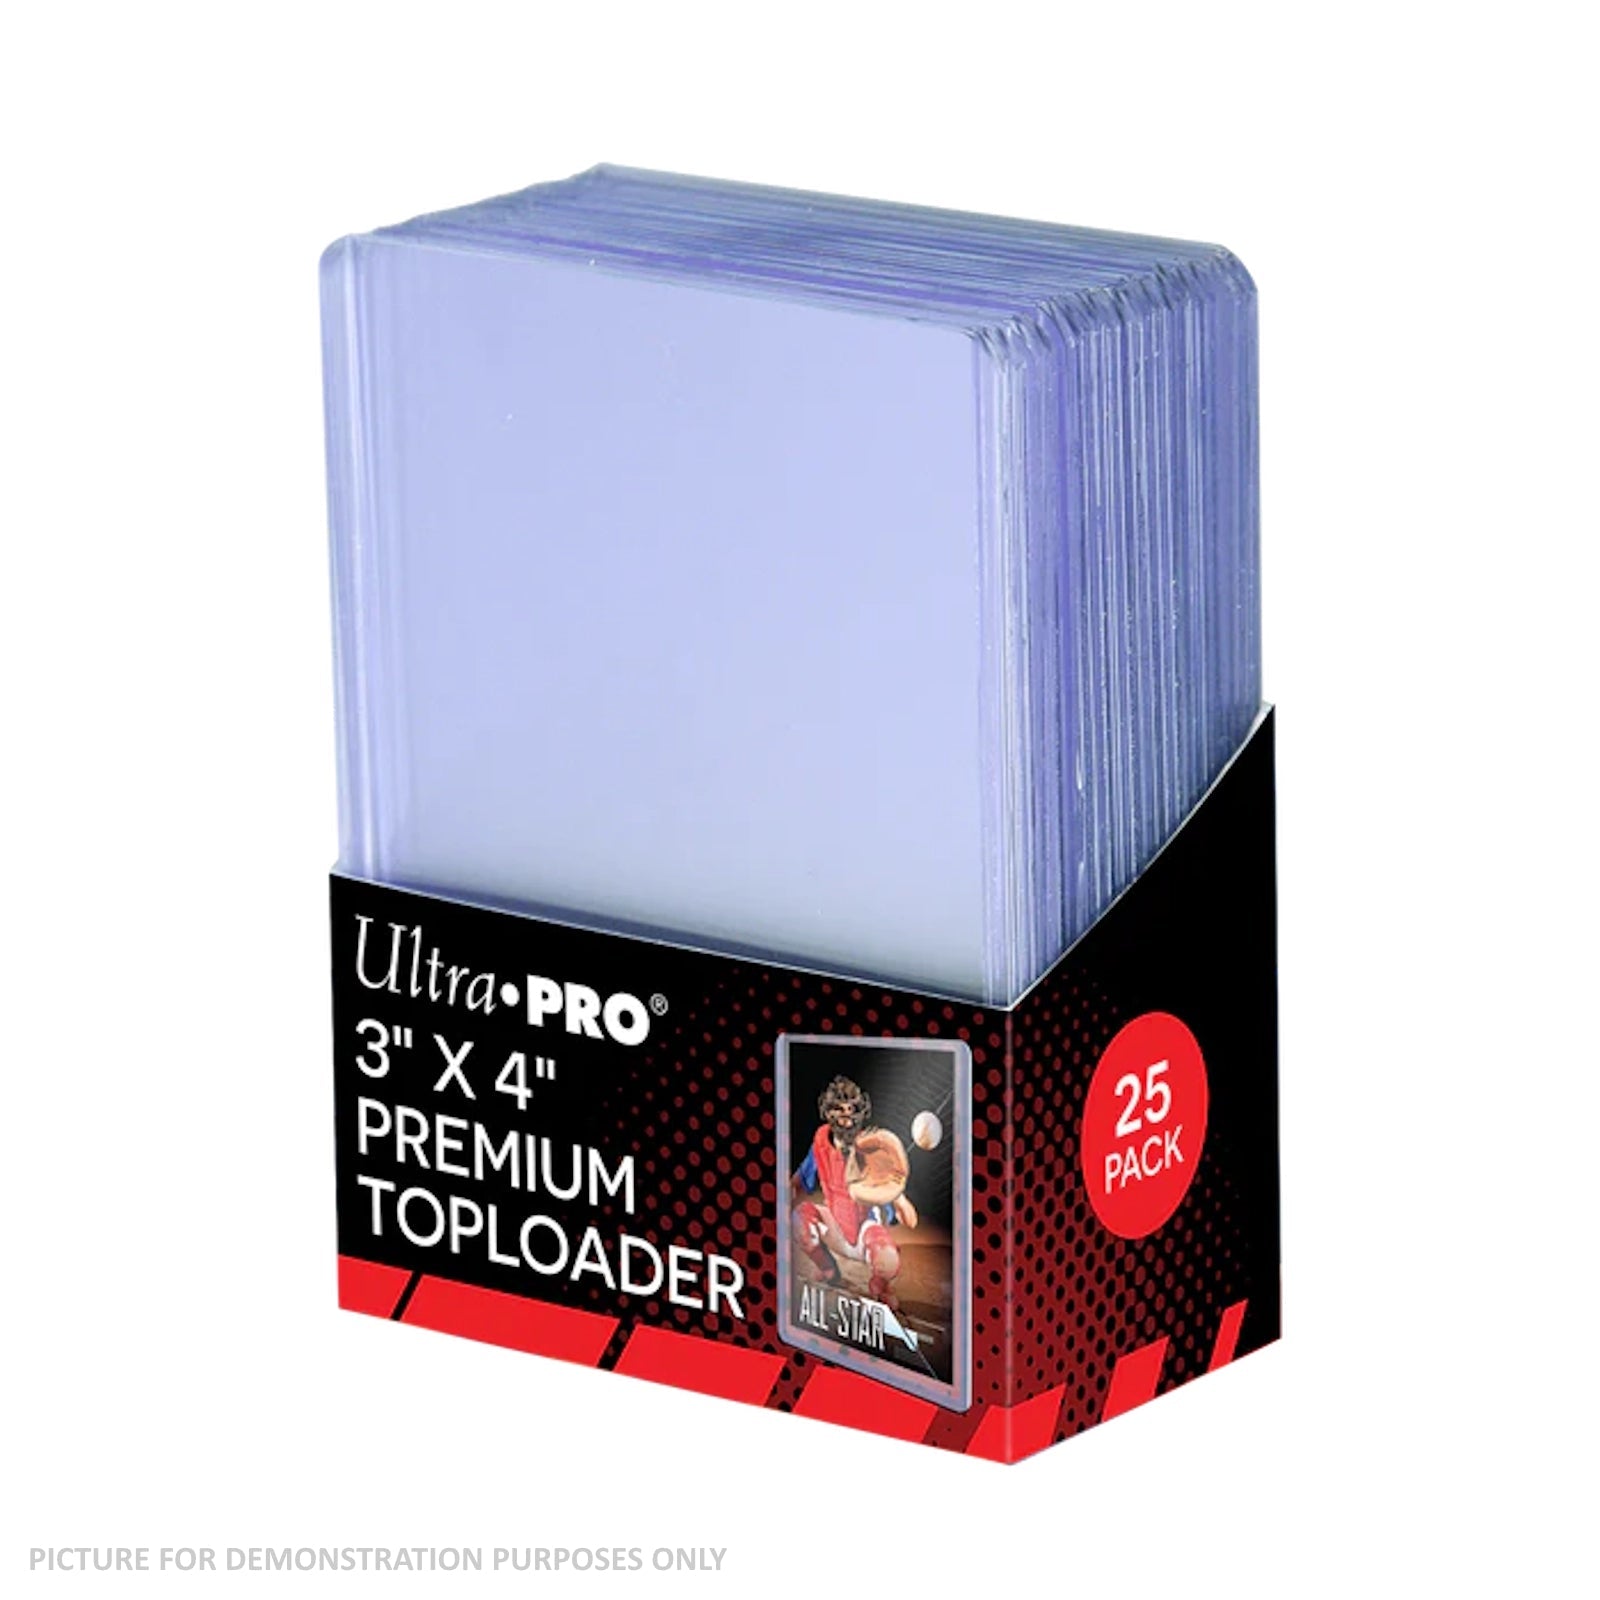 Ultra Pro Ultra Clear Premium Toploader 3"X 4" - PACK OF 25